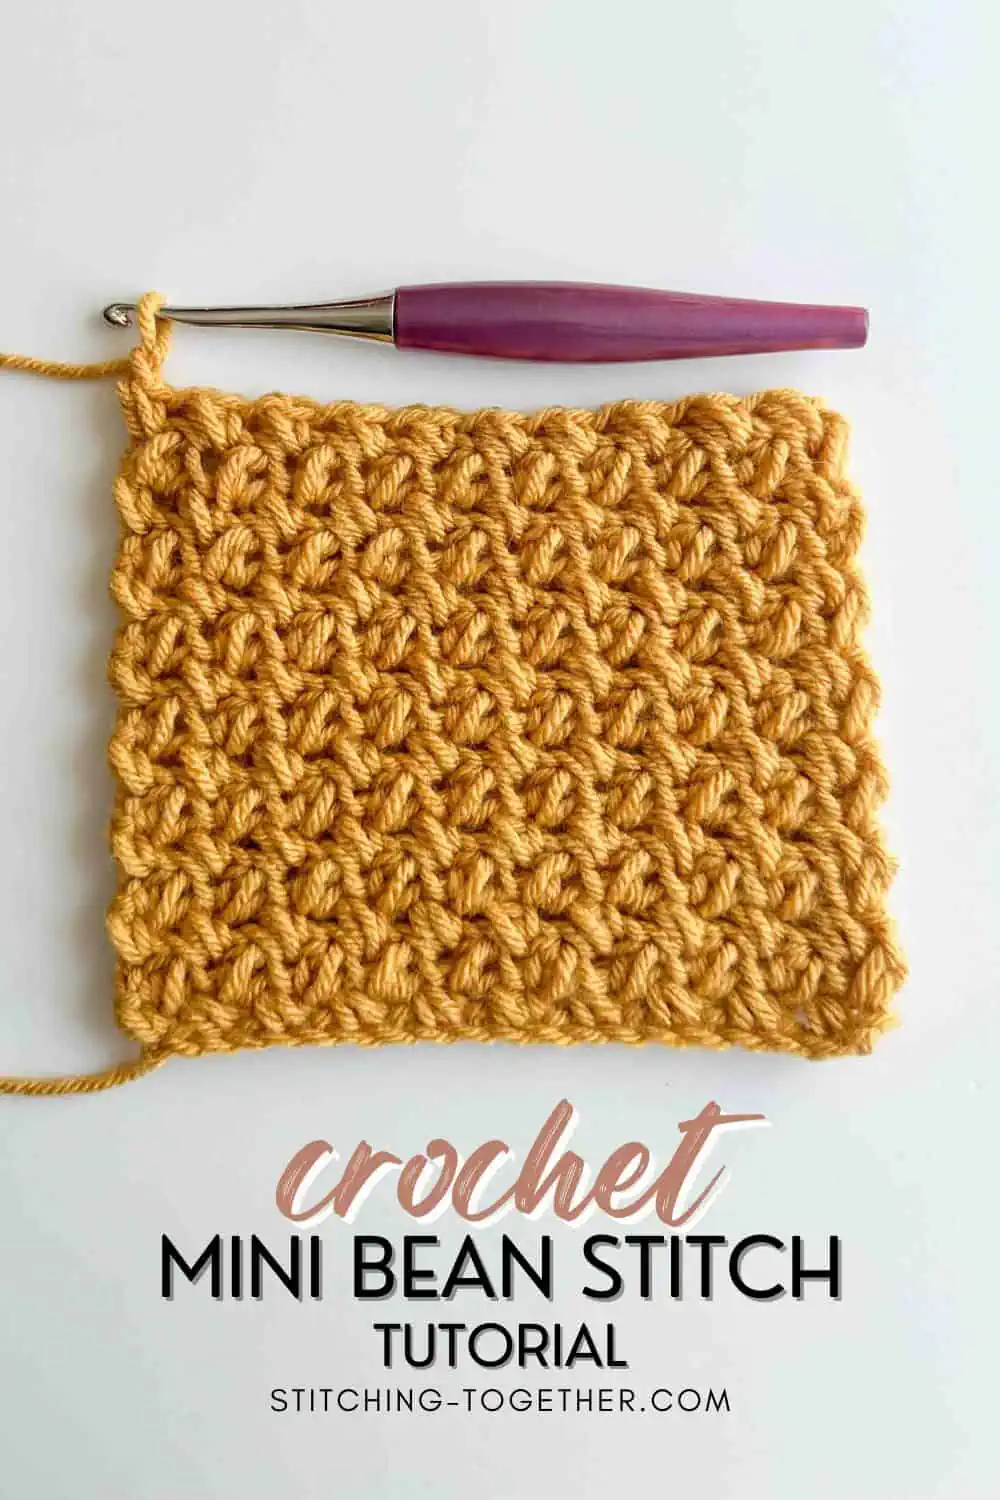 swatch of mini bean stitch fabric with text reading "crochet mini bean stitch tutorial"